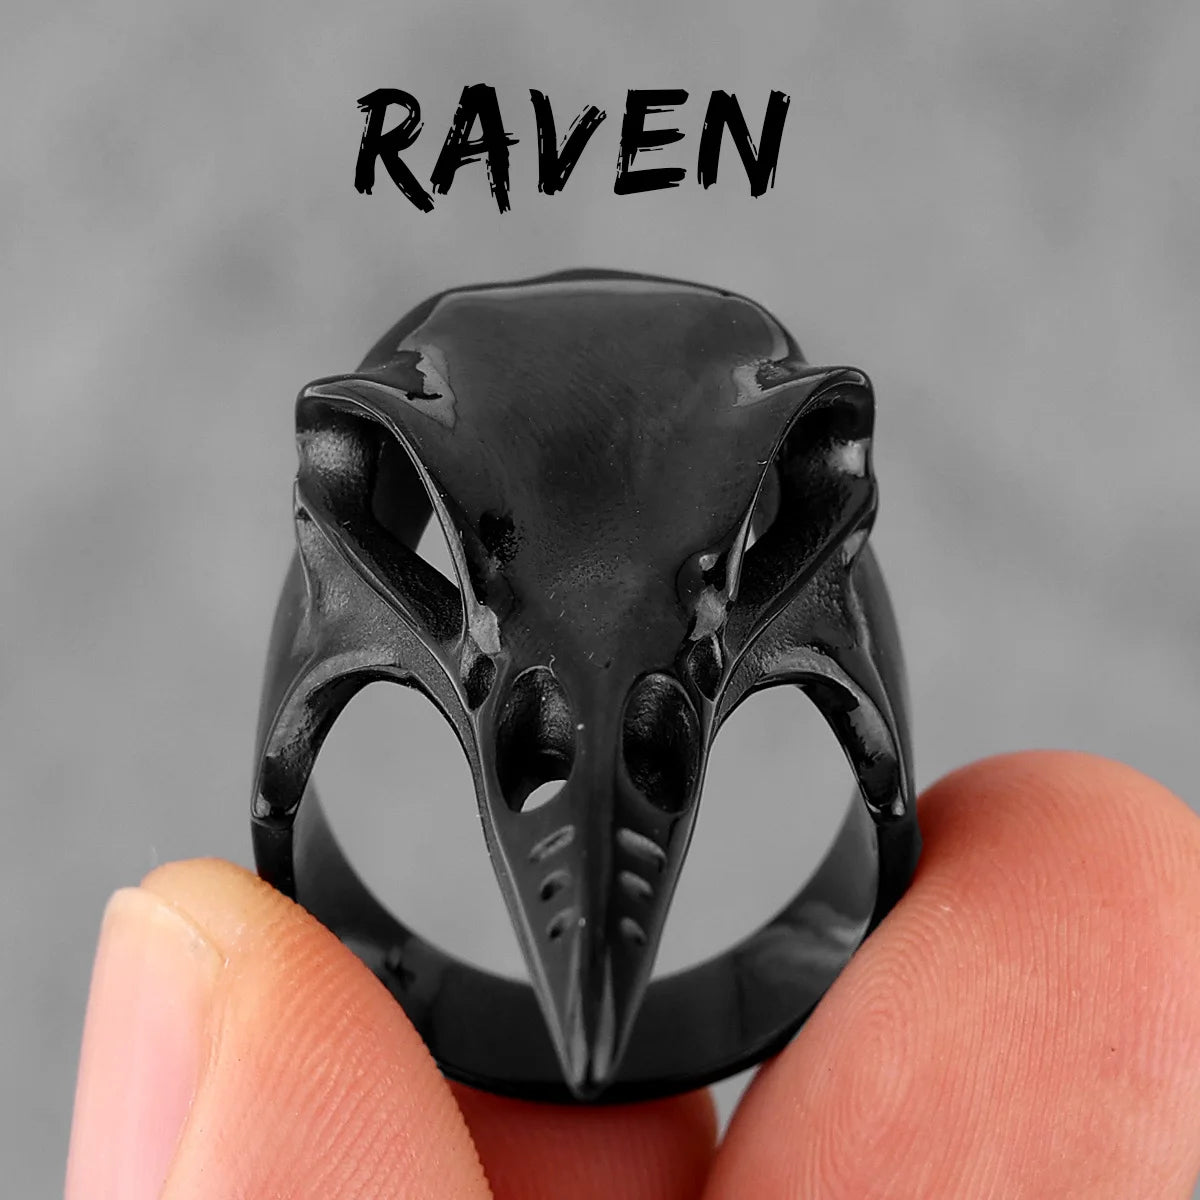 Viking Raven Skull Stainless Steel Mens Rings Punk Amulet Gothic for Male Boyfriend Biker Jewelry Creativity Gift R705-Black